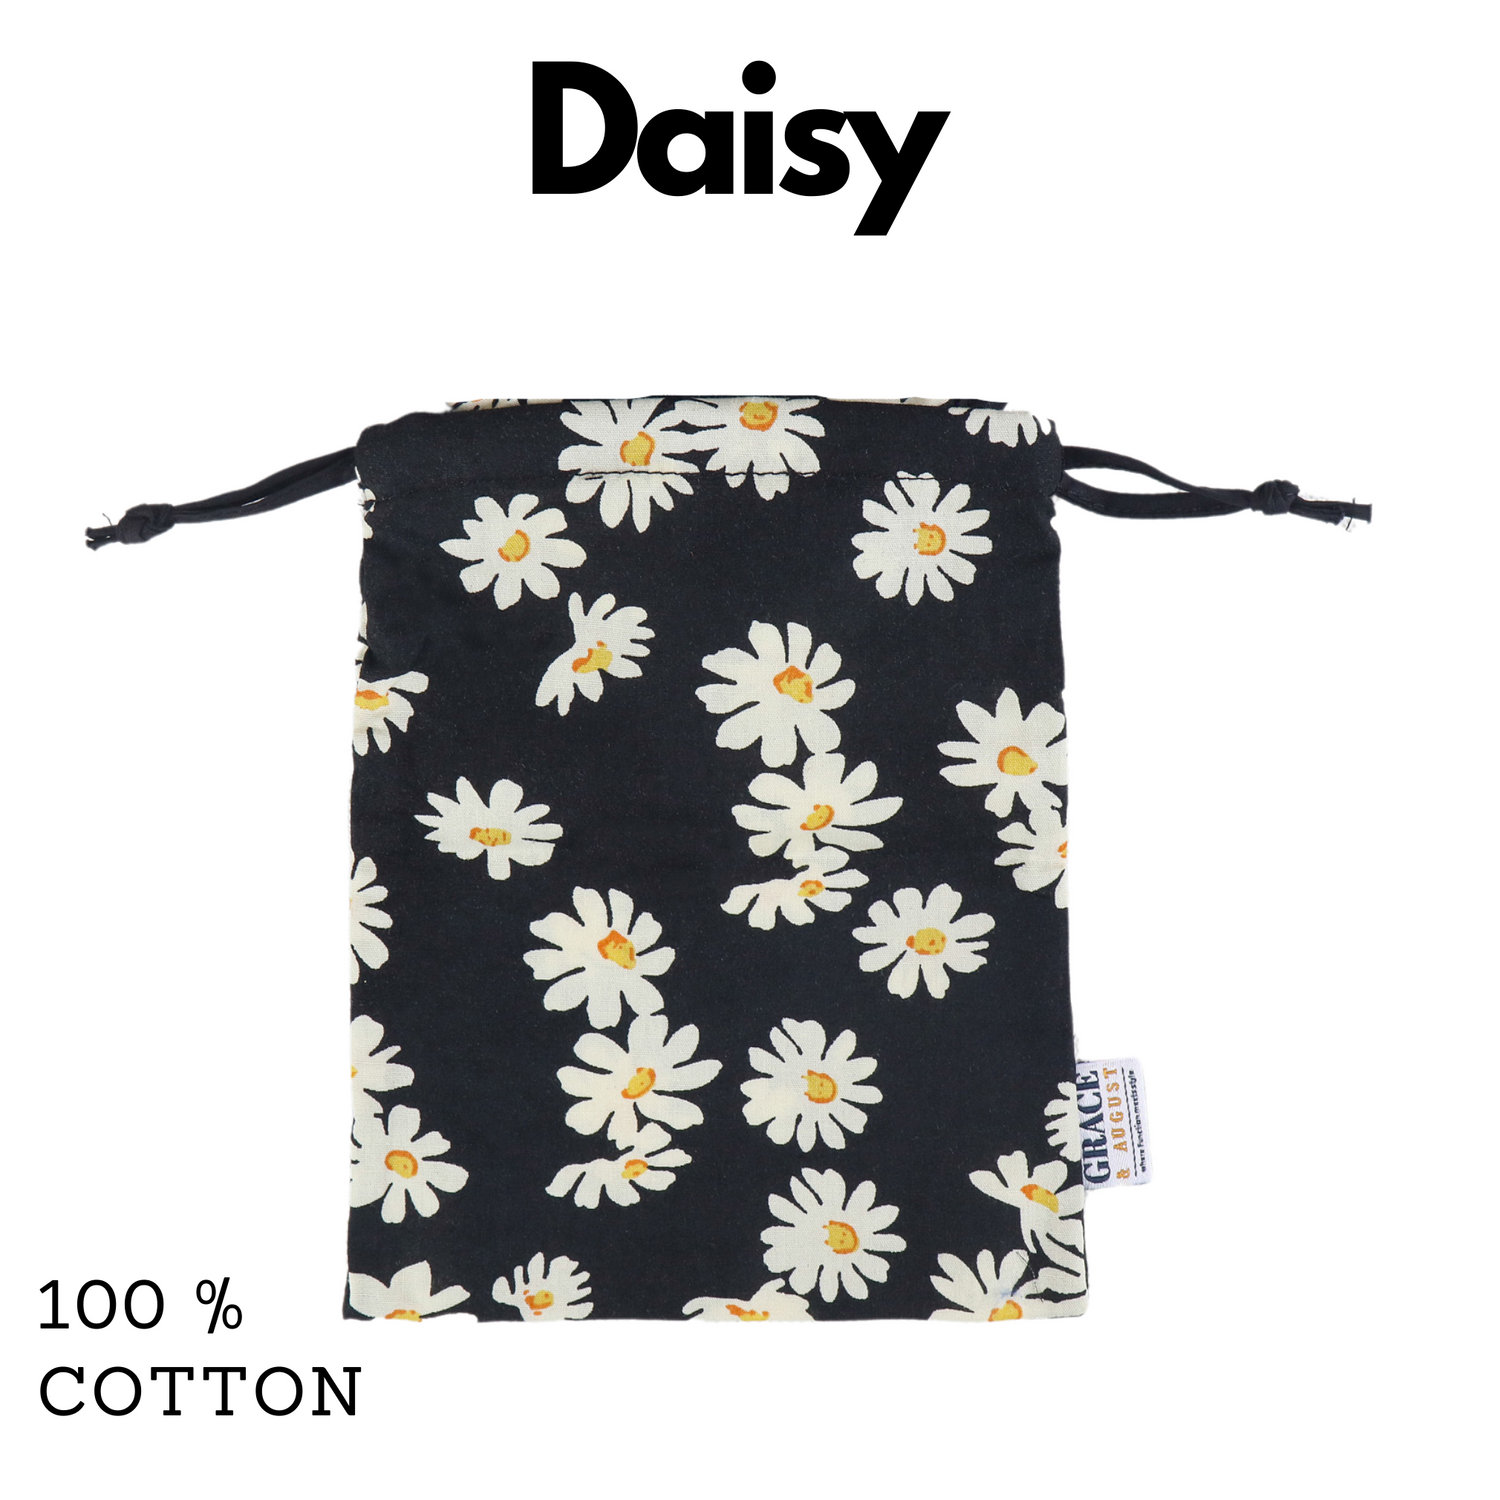 cotton daisy drawstring bag